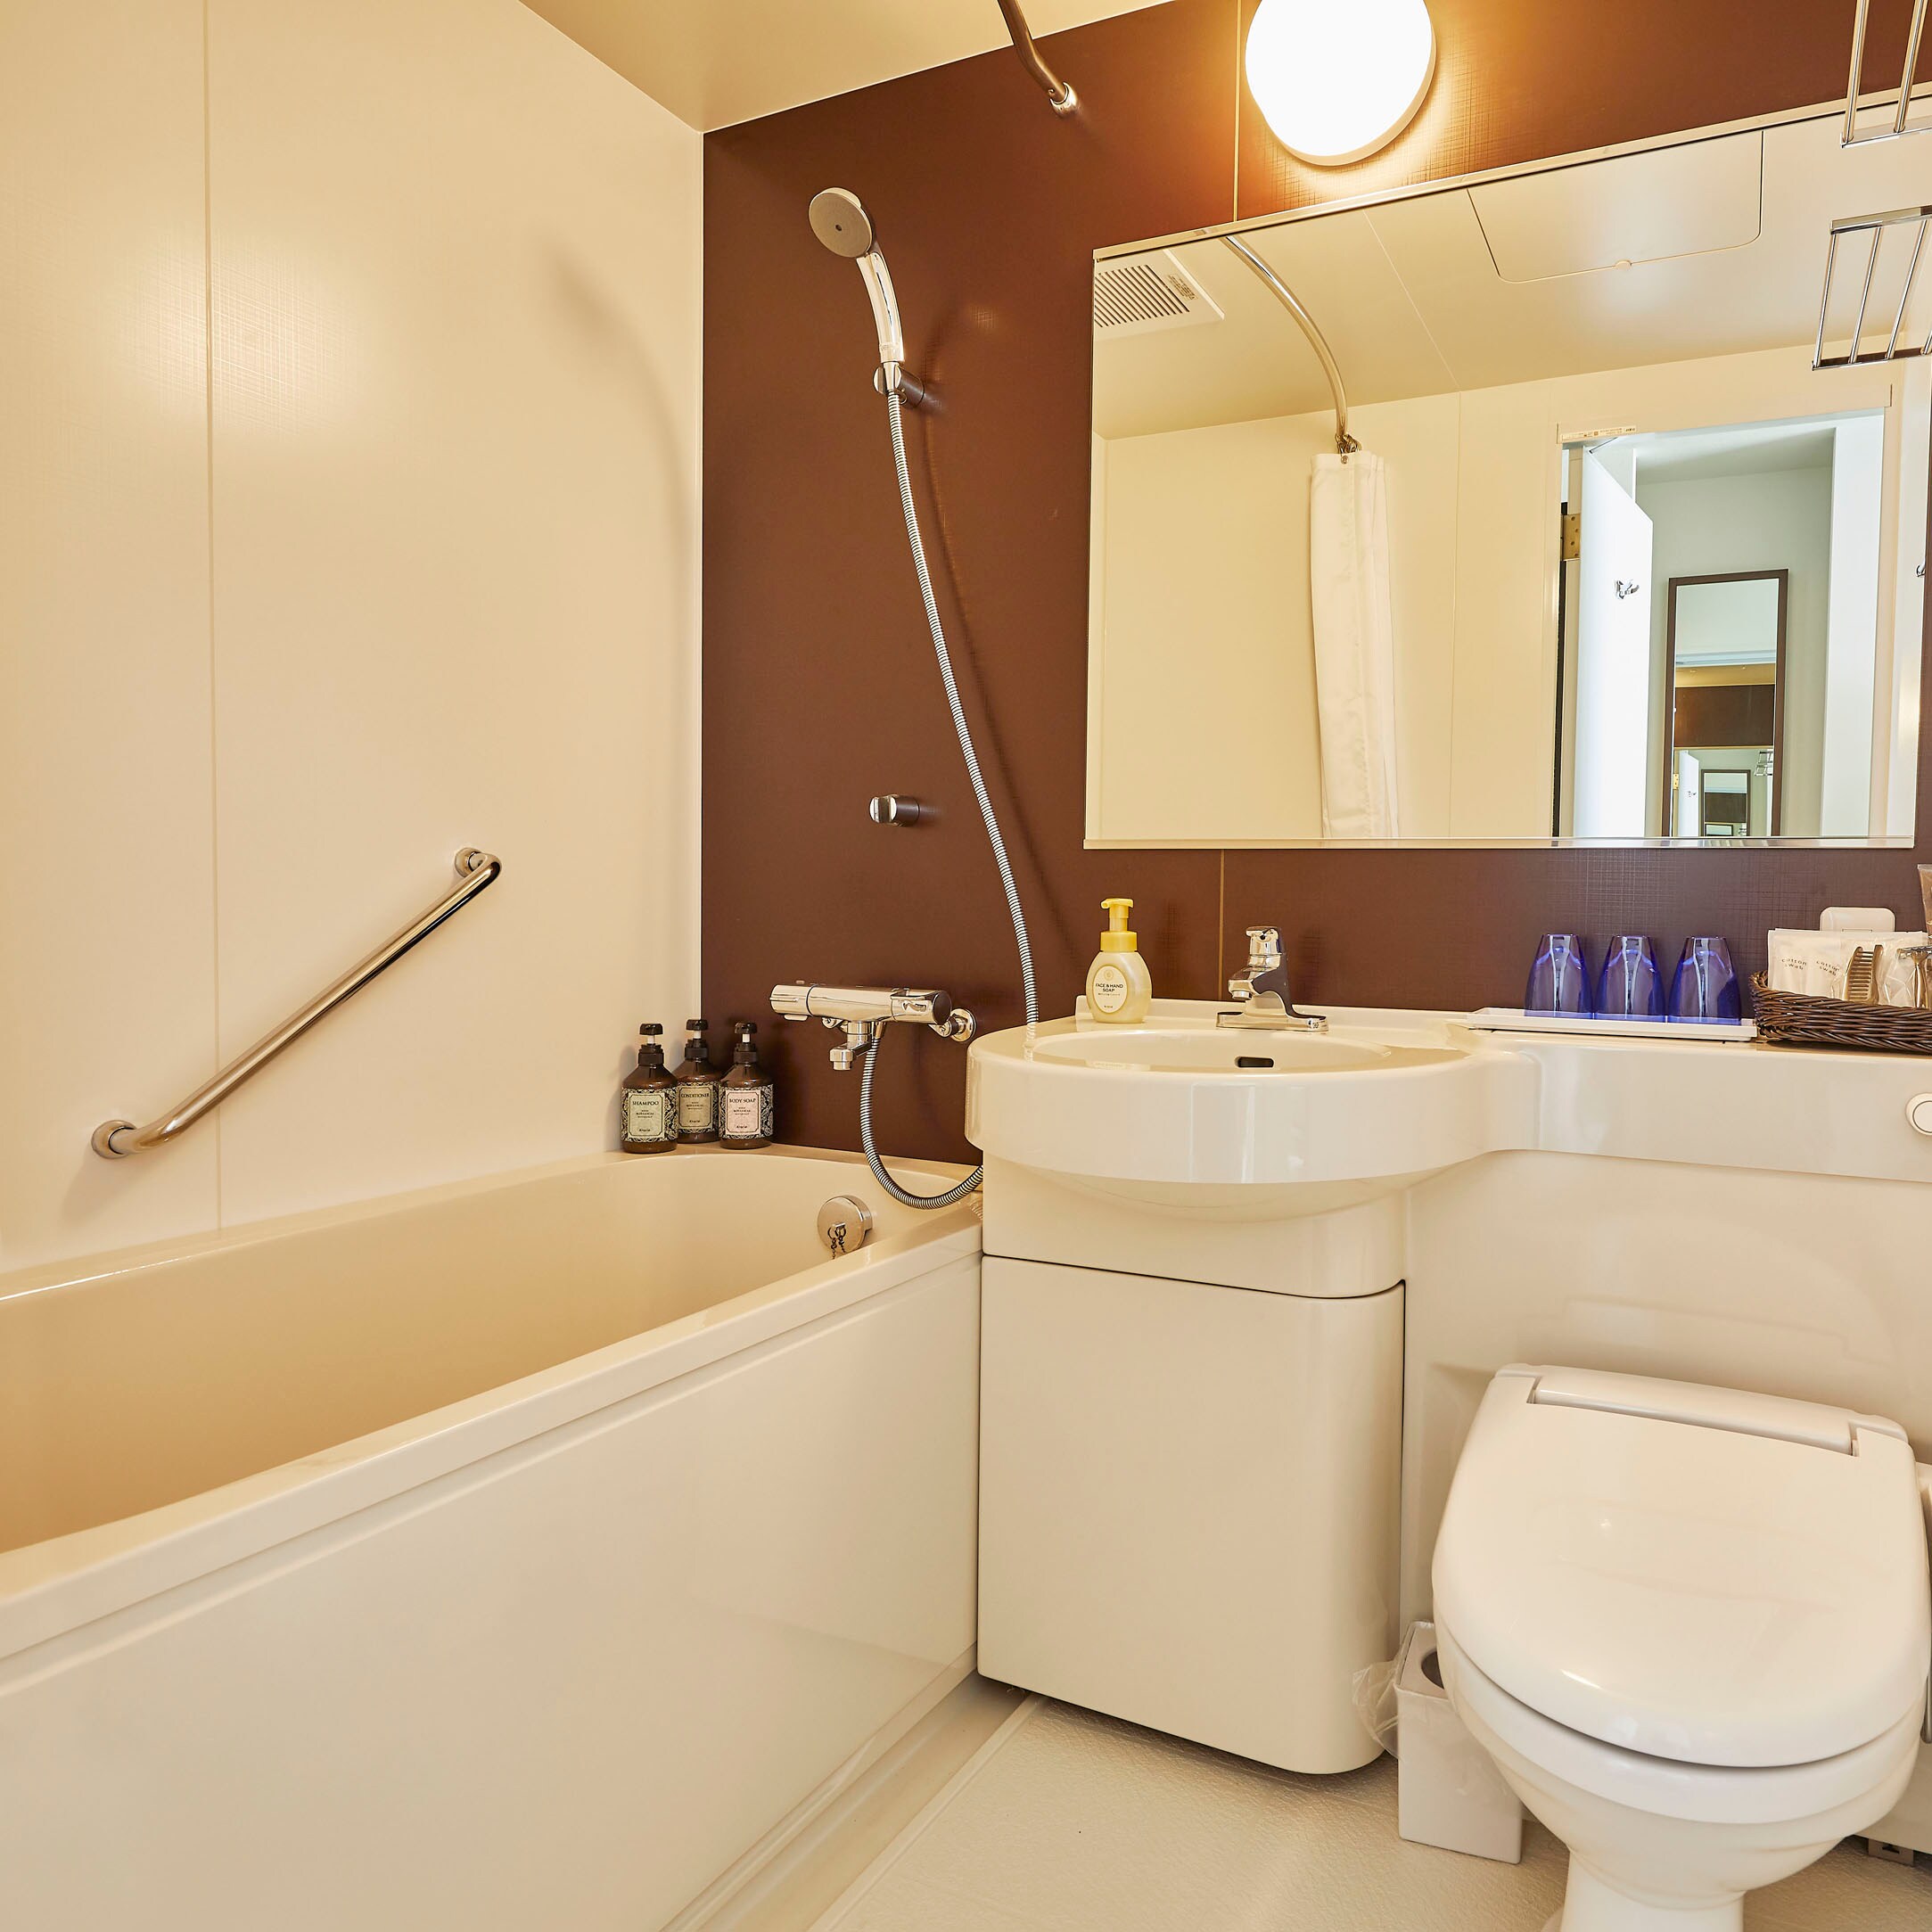 Single / double / standard room unit bath (image)